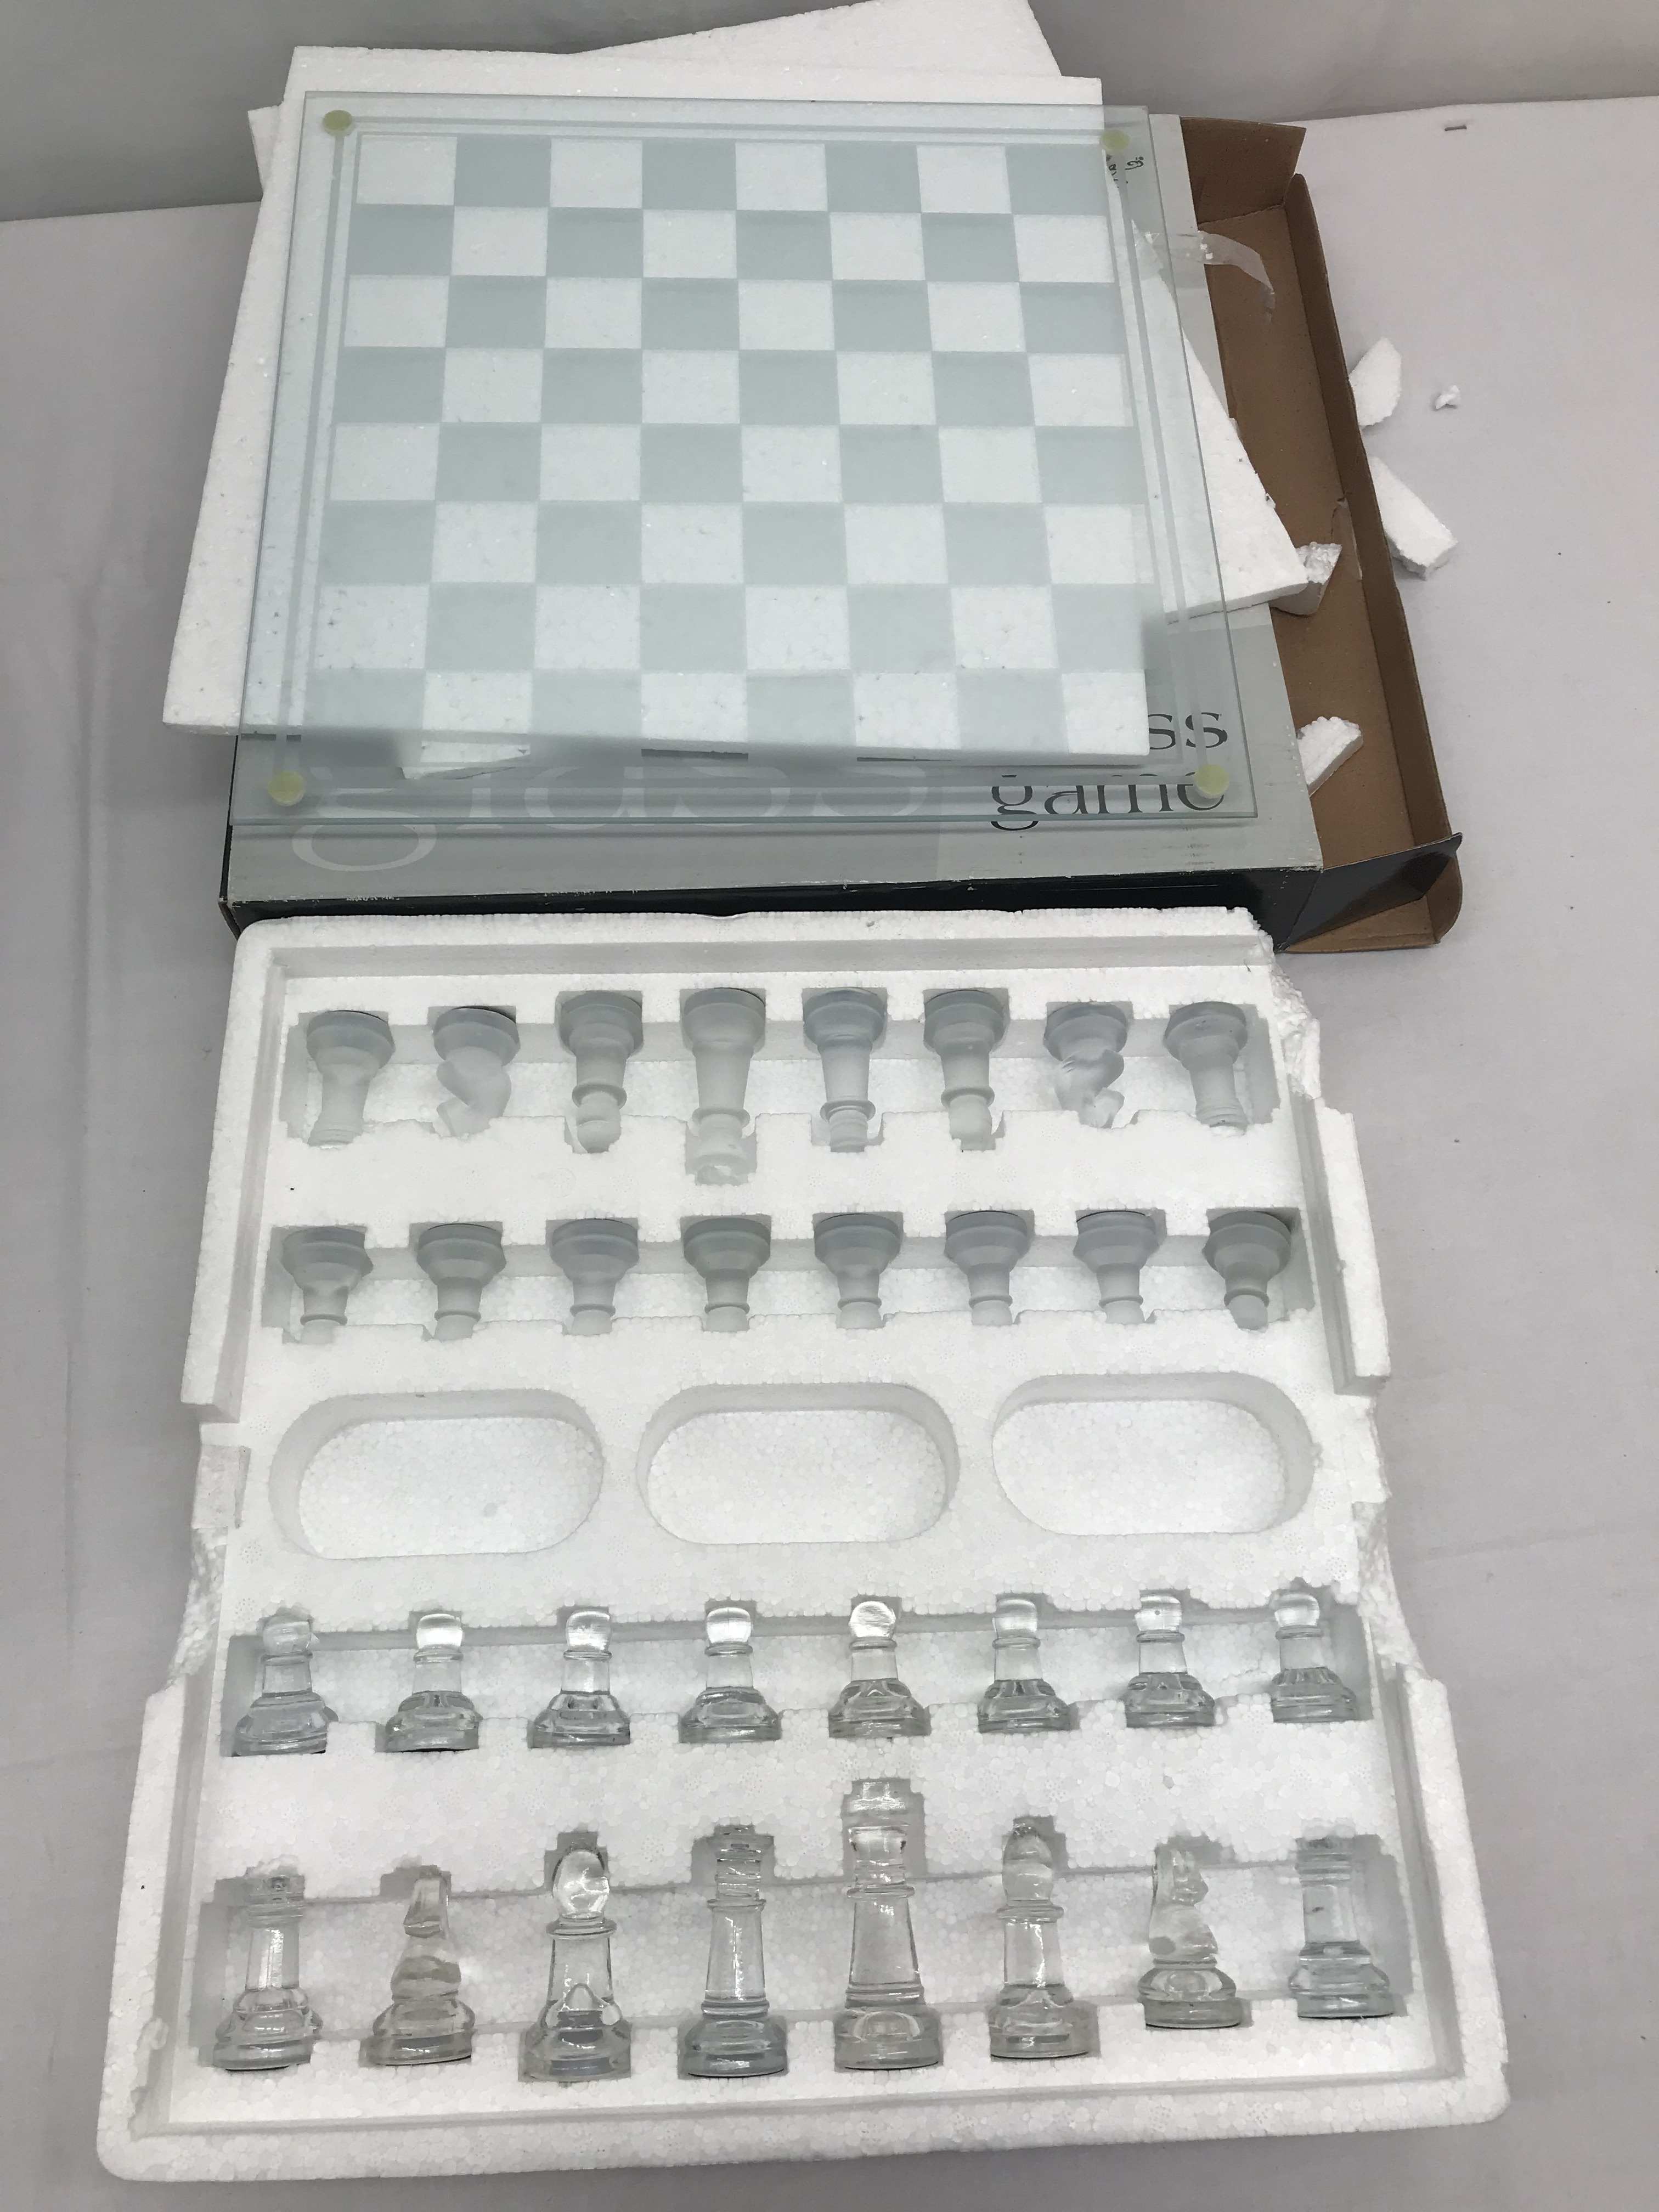 A boxed glass chess set